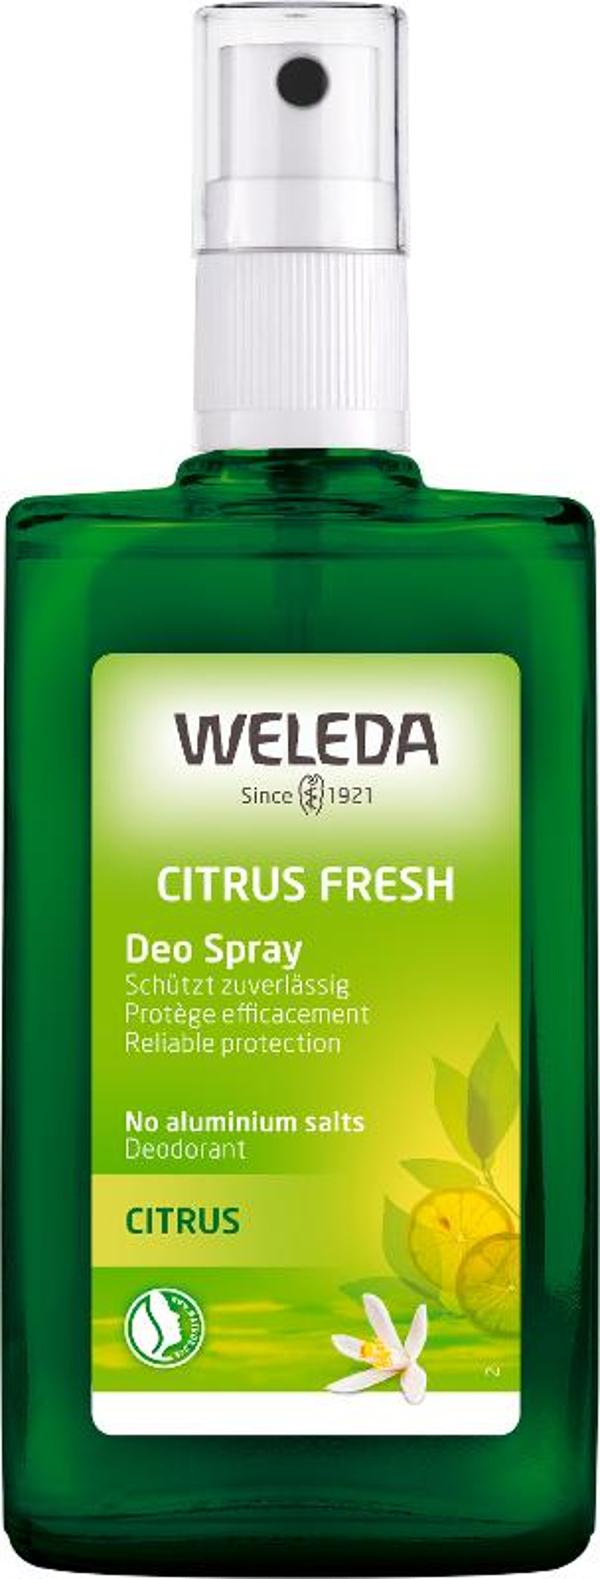 Produktfoto zu Citrus Deodorant Weleda